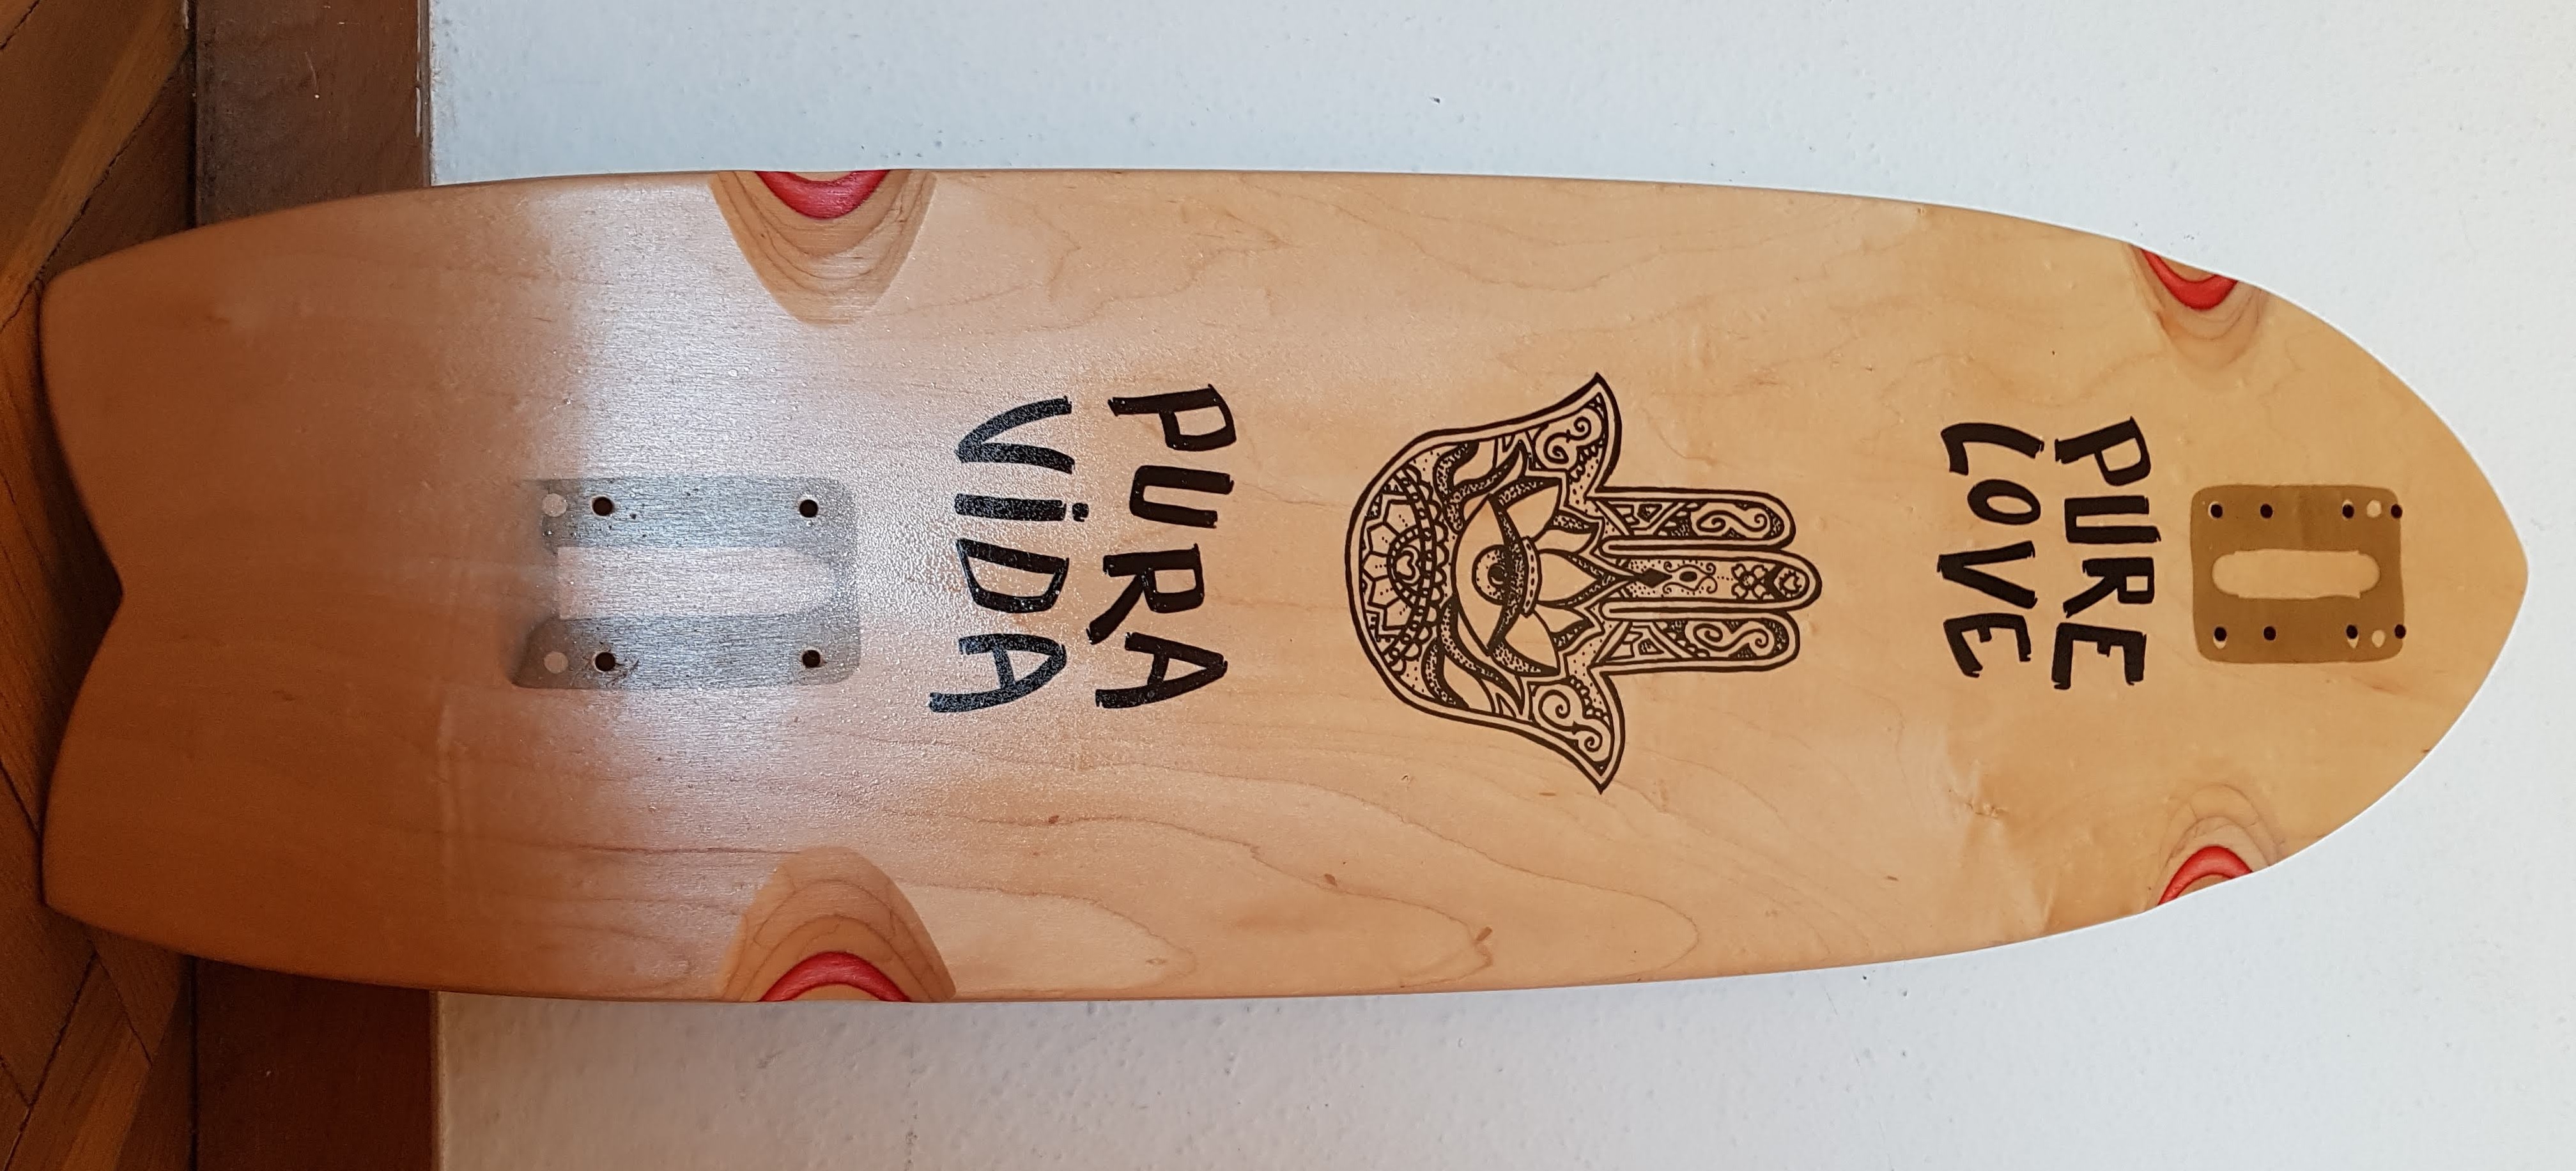 surfskate personalizado